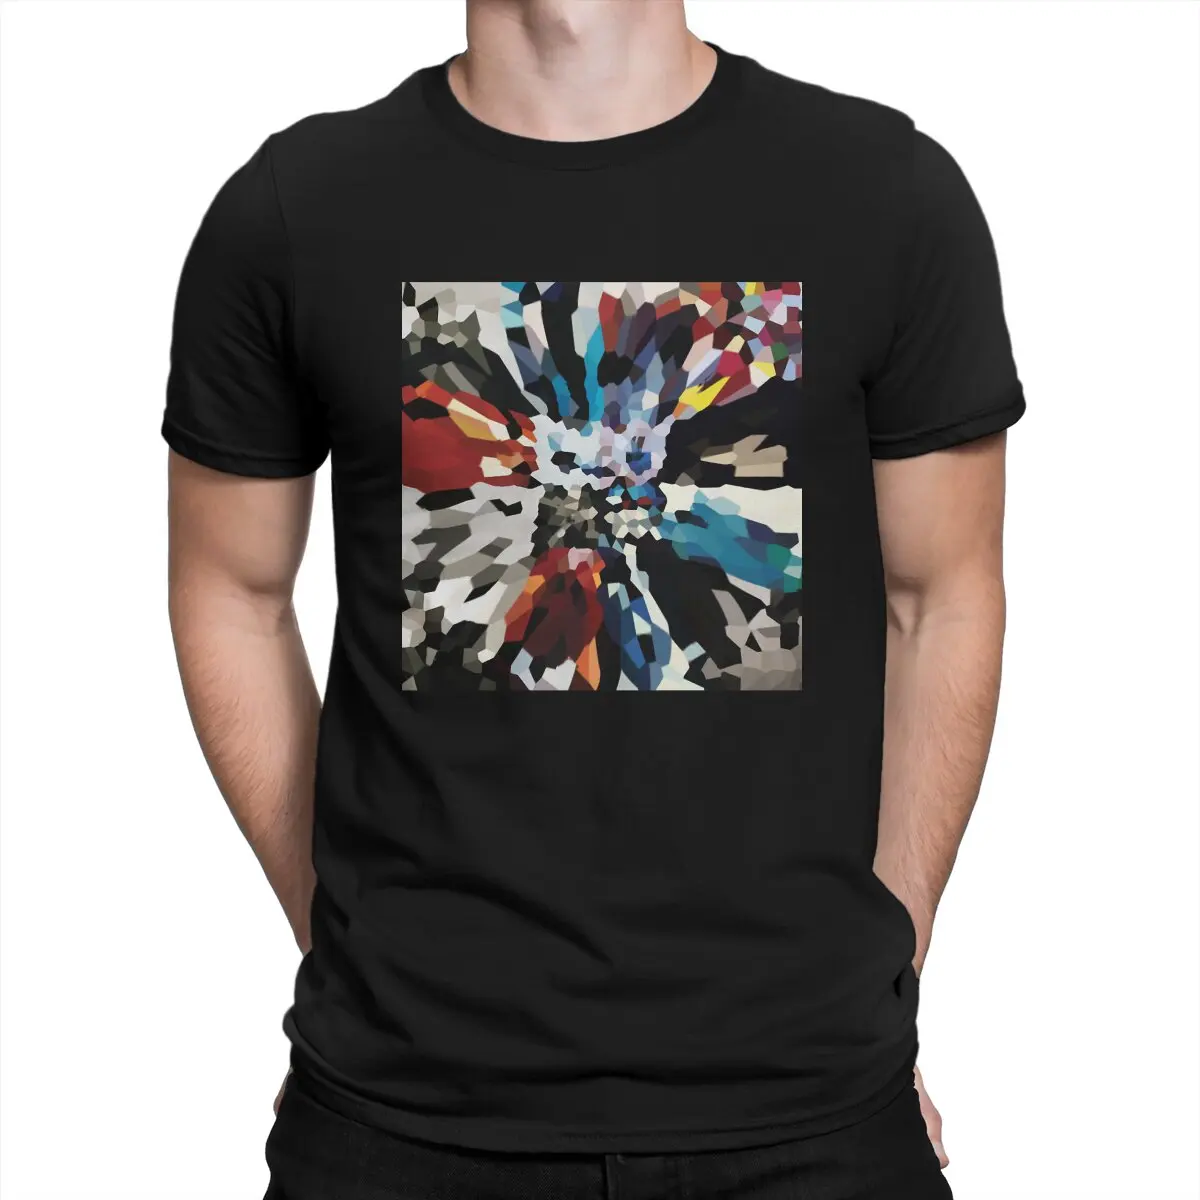 

Men's T-Shirts Achtung Baby - Squares Humor 100% Cotton Tee Shirt Short Sleeve U2 Rock Band T Shirt Round Neck Clothing